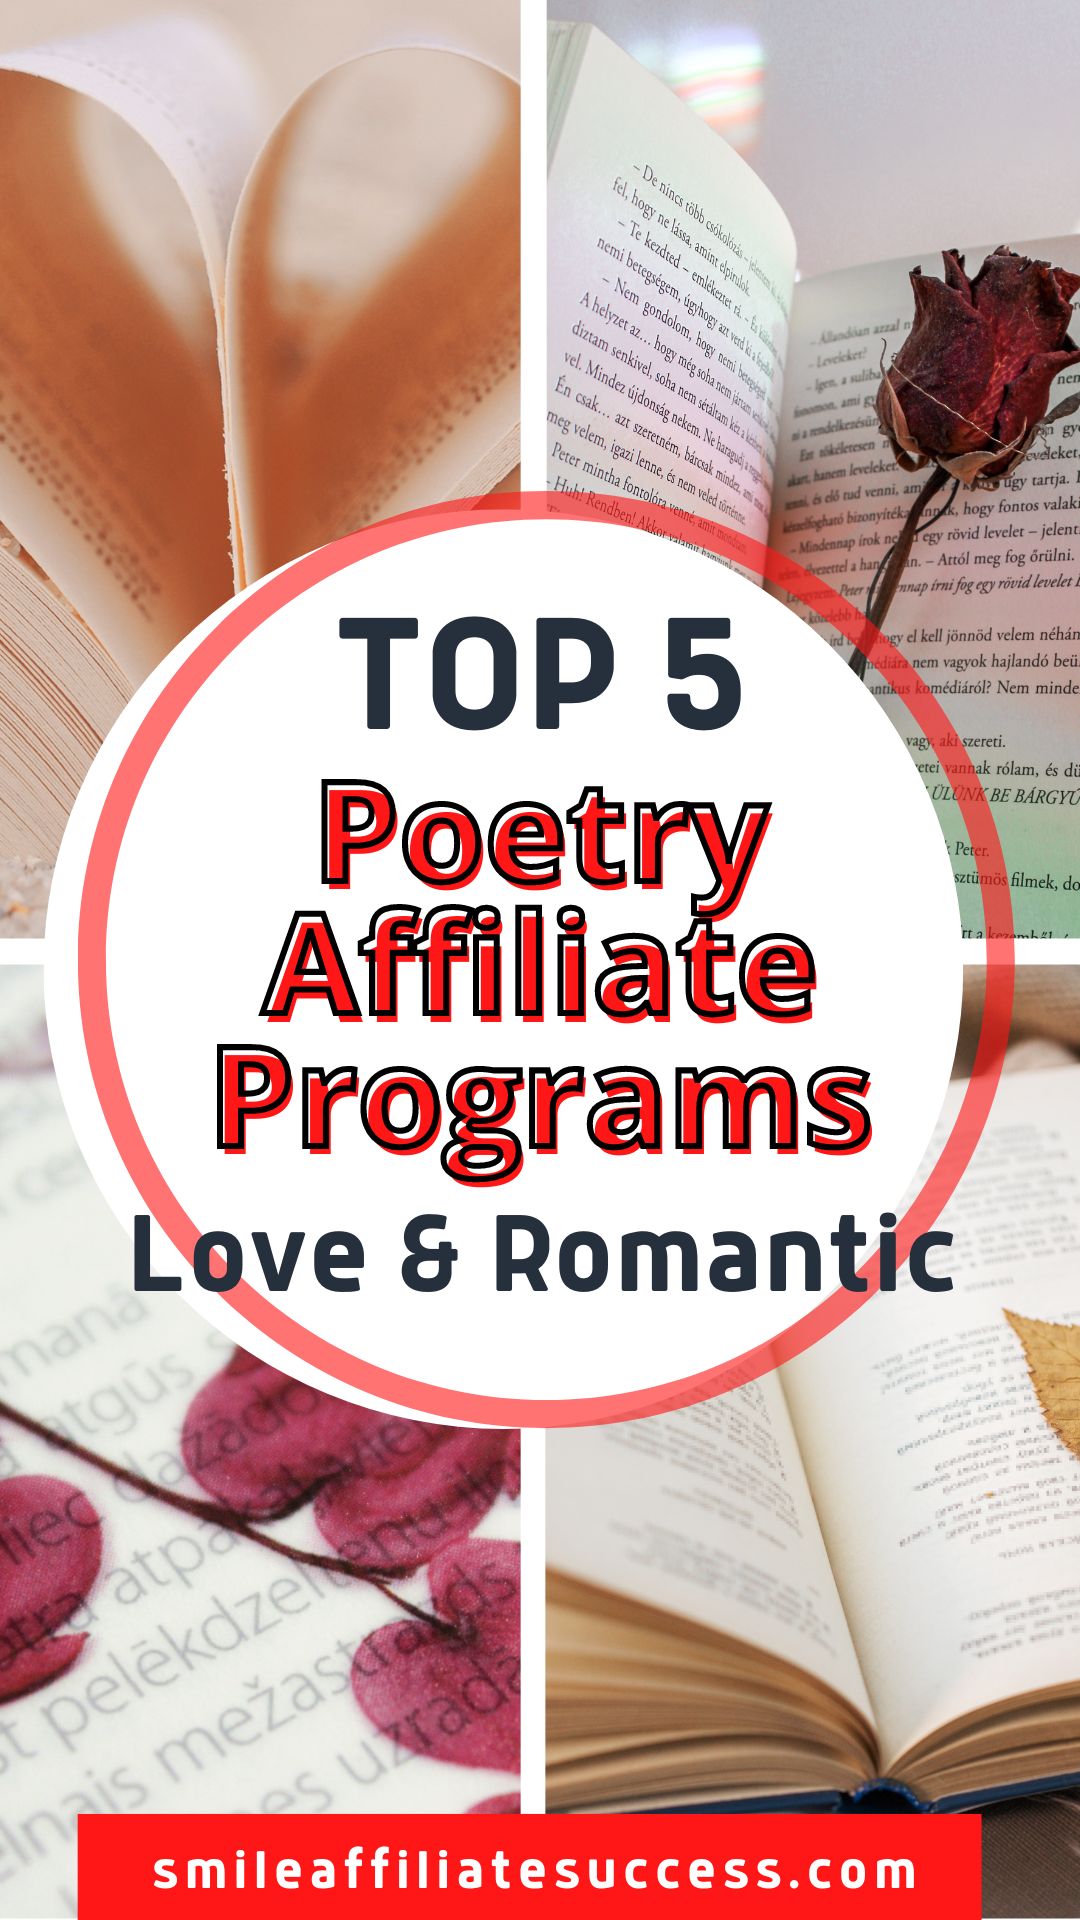 Top 5 Poetry Affiliate Programs